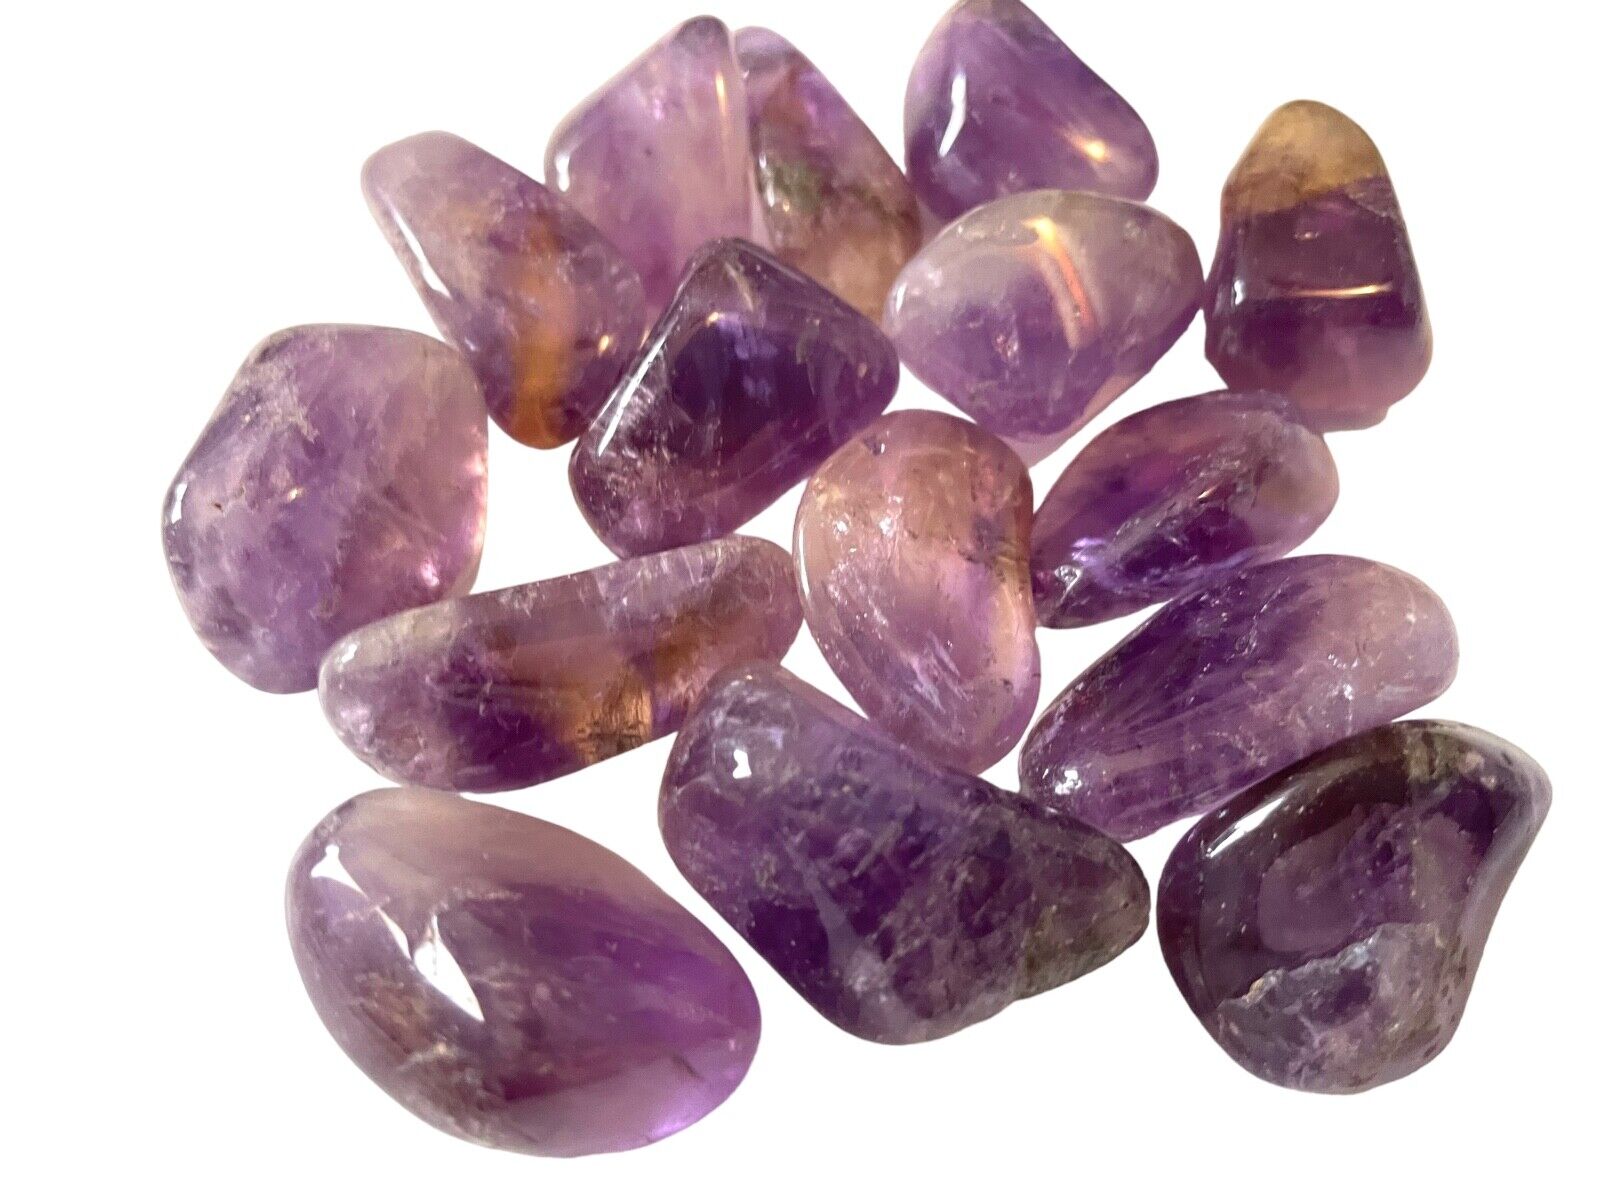 1X Ametrine Tumbled Stone 20-25mm Reiki Healing Crystal Calms Remove Negativity